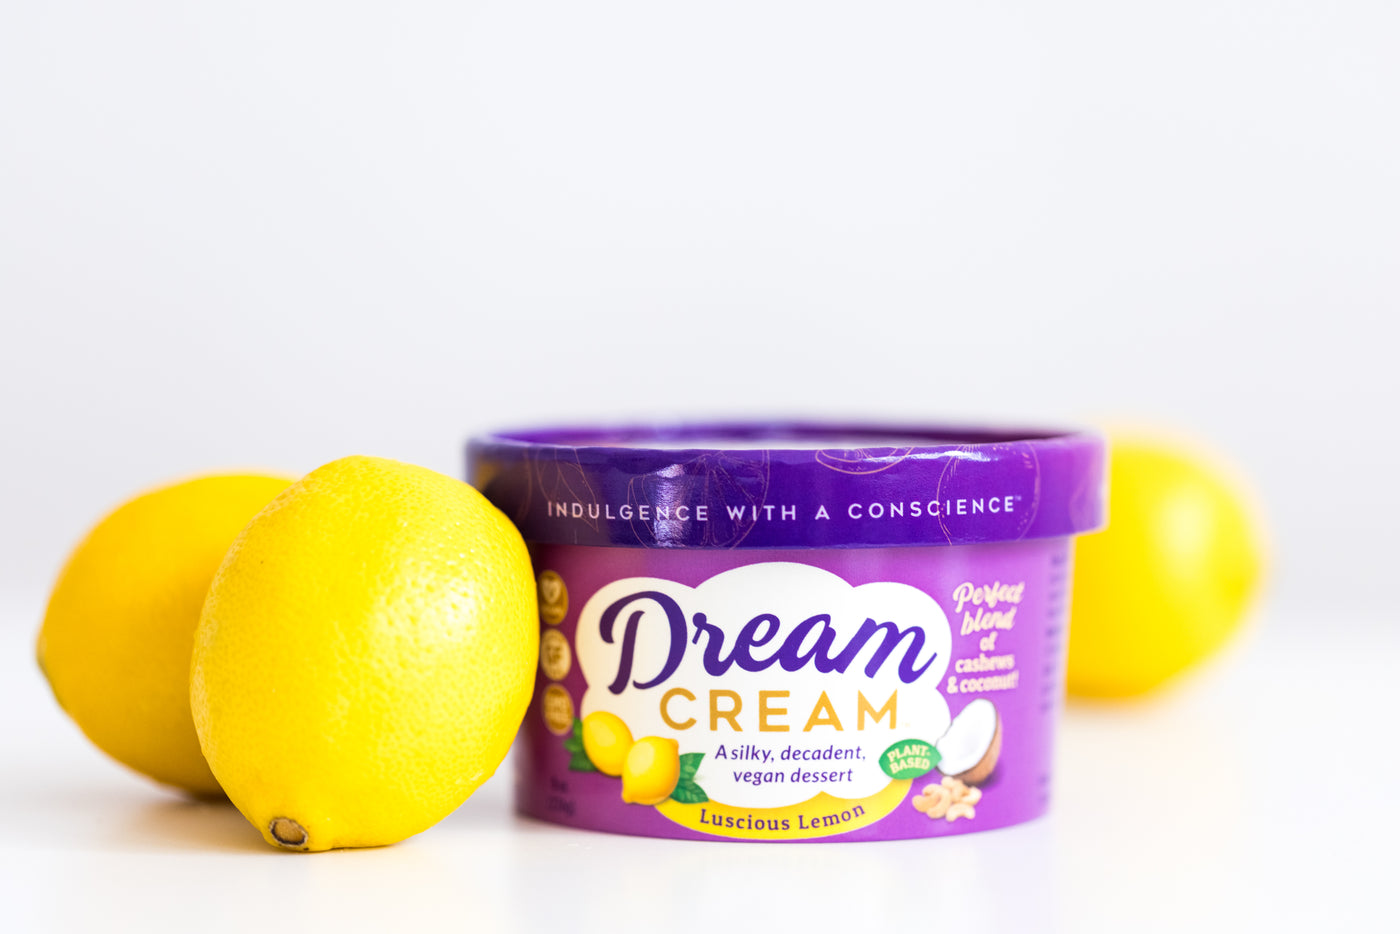 Dream Cream Luscious Lemon with lemons